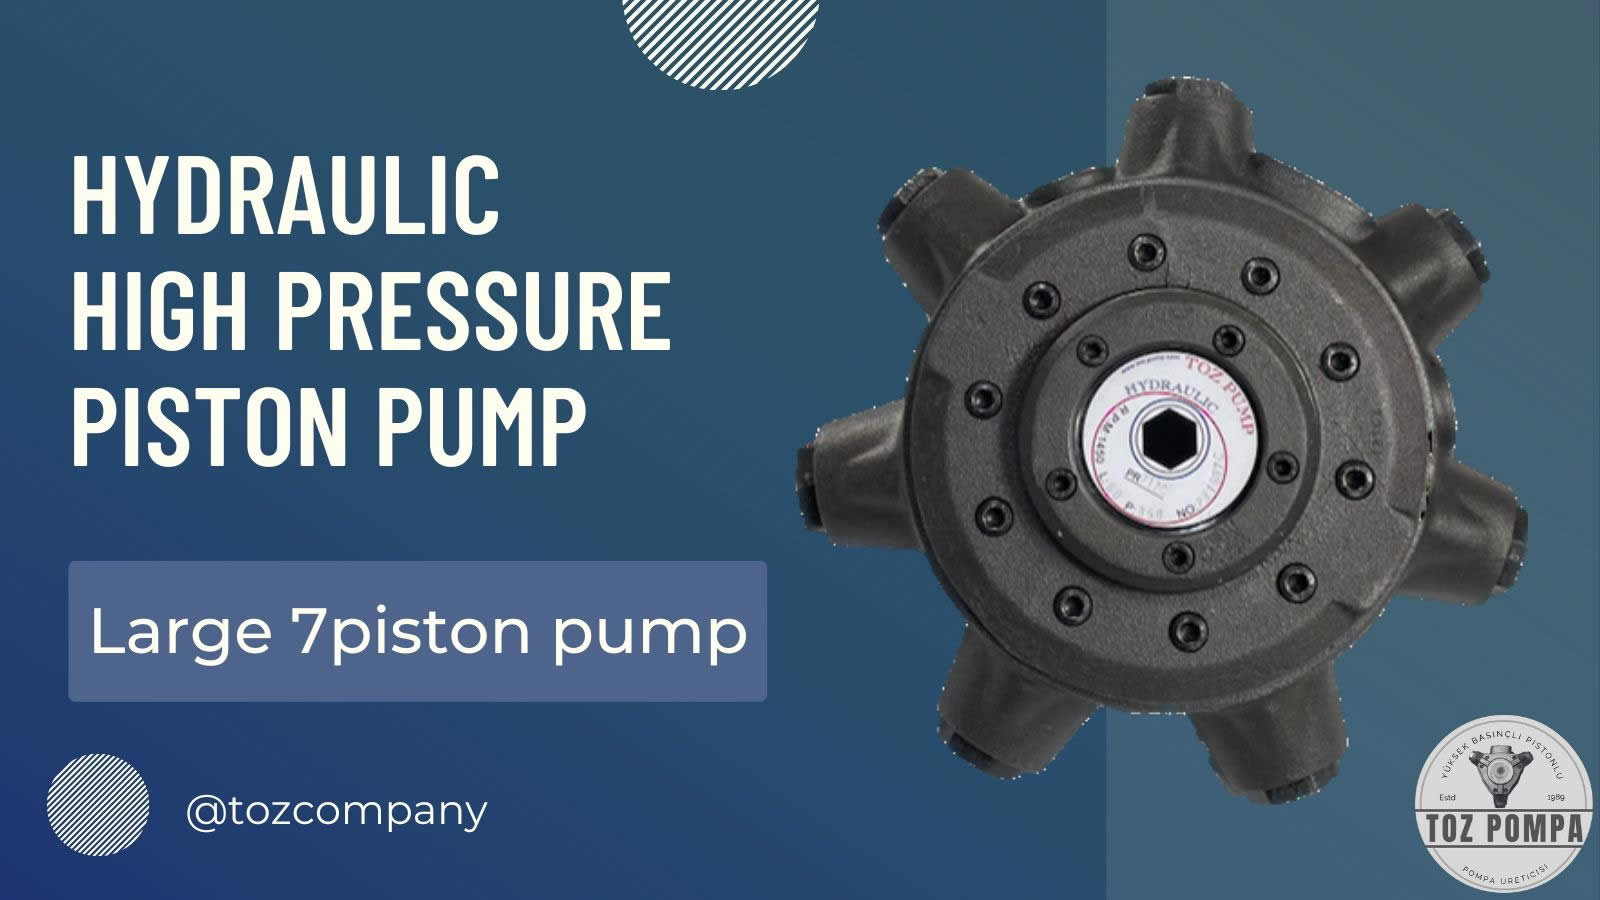 Large 7 piston pump